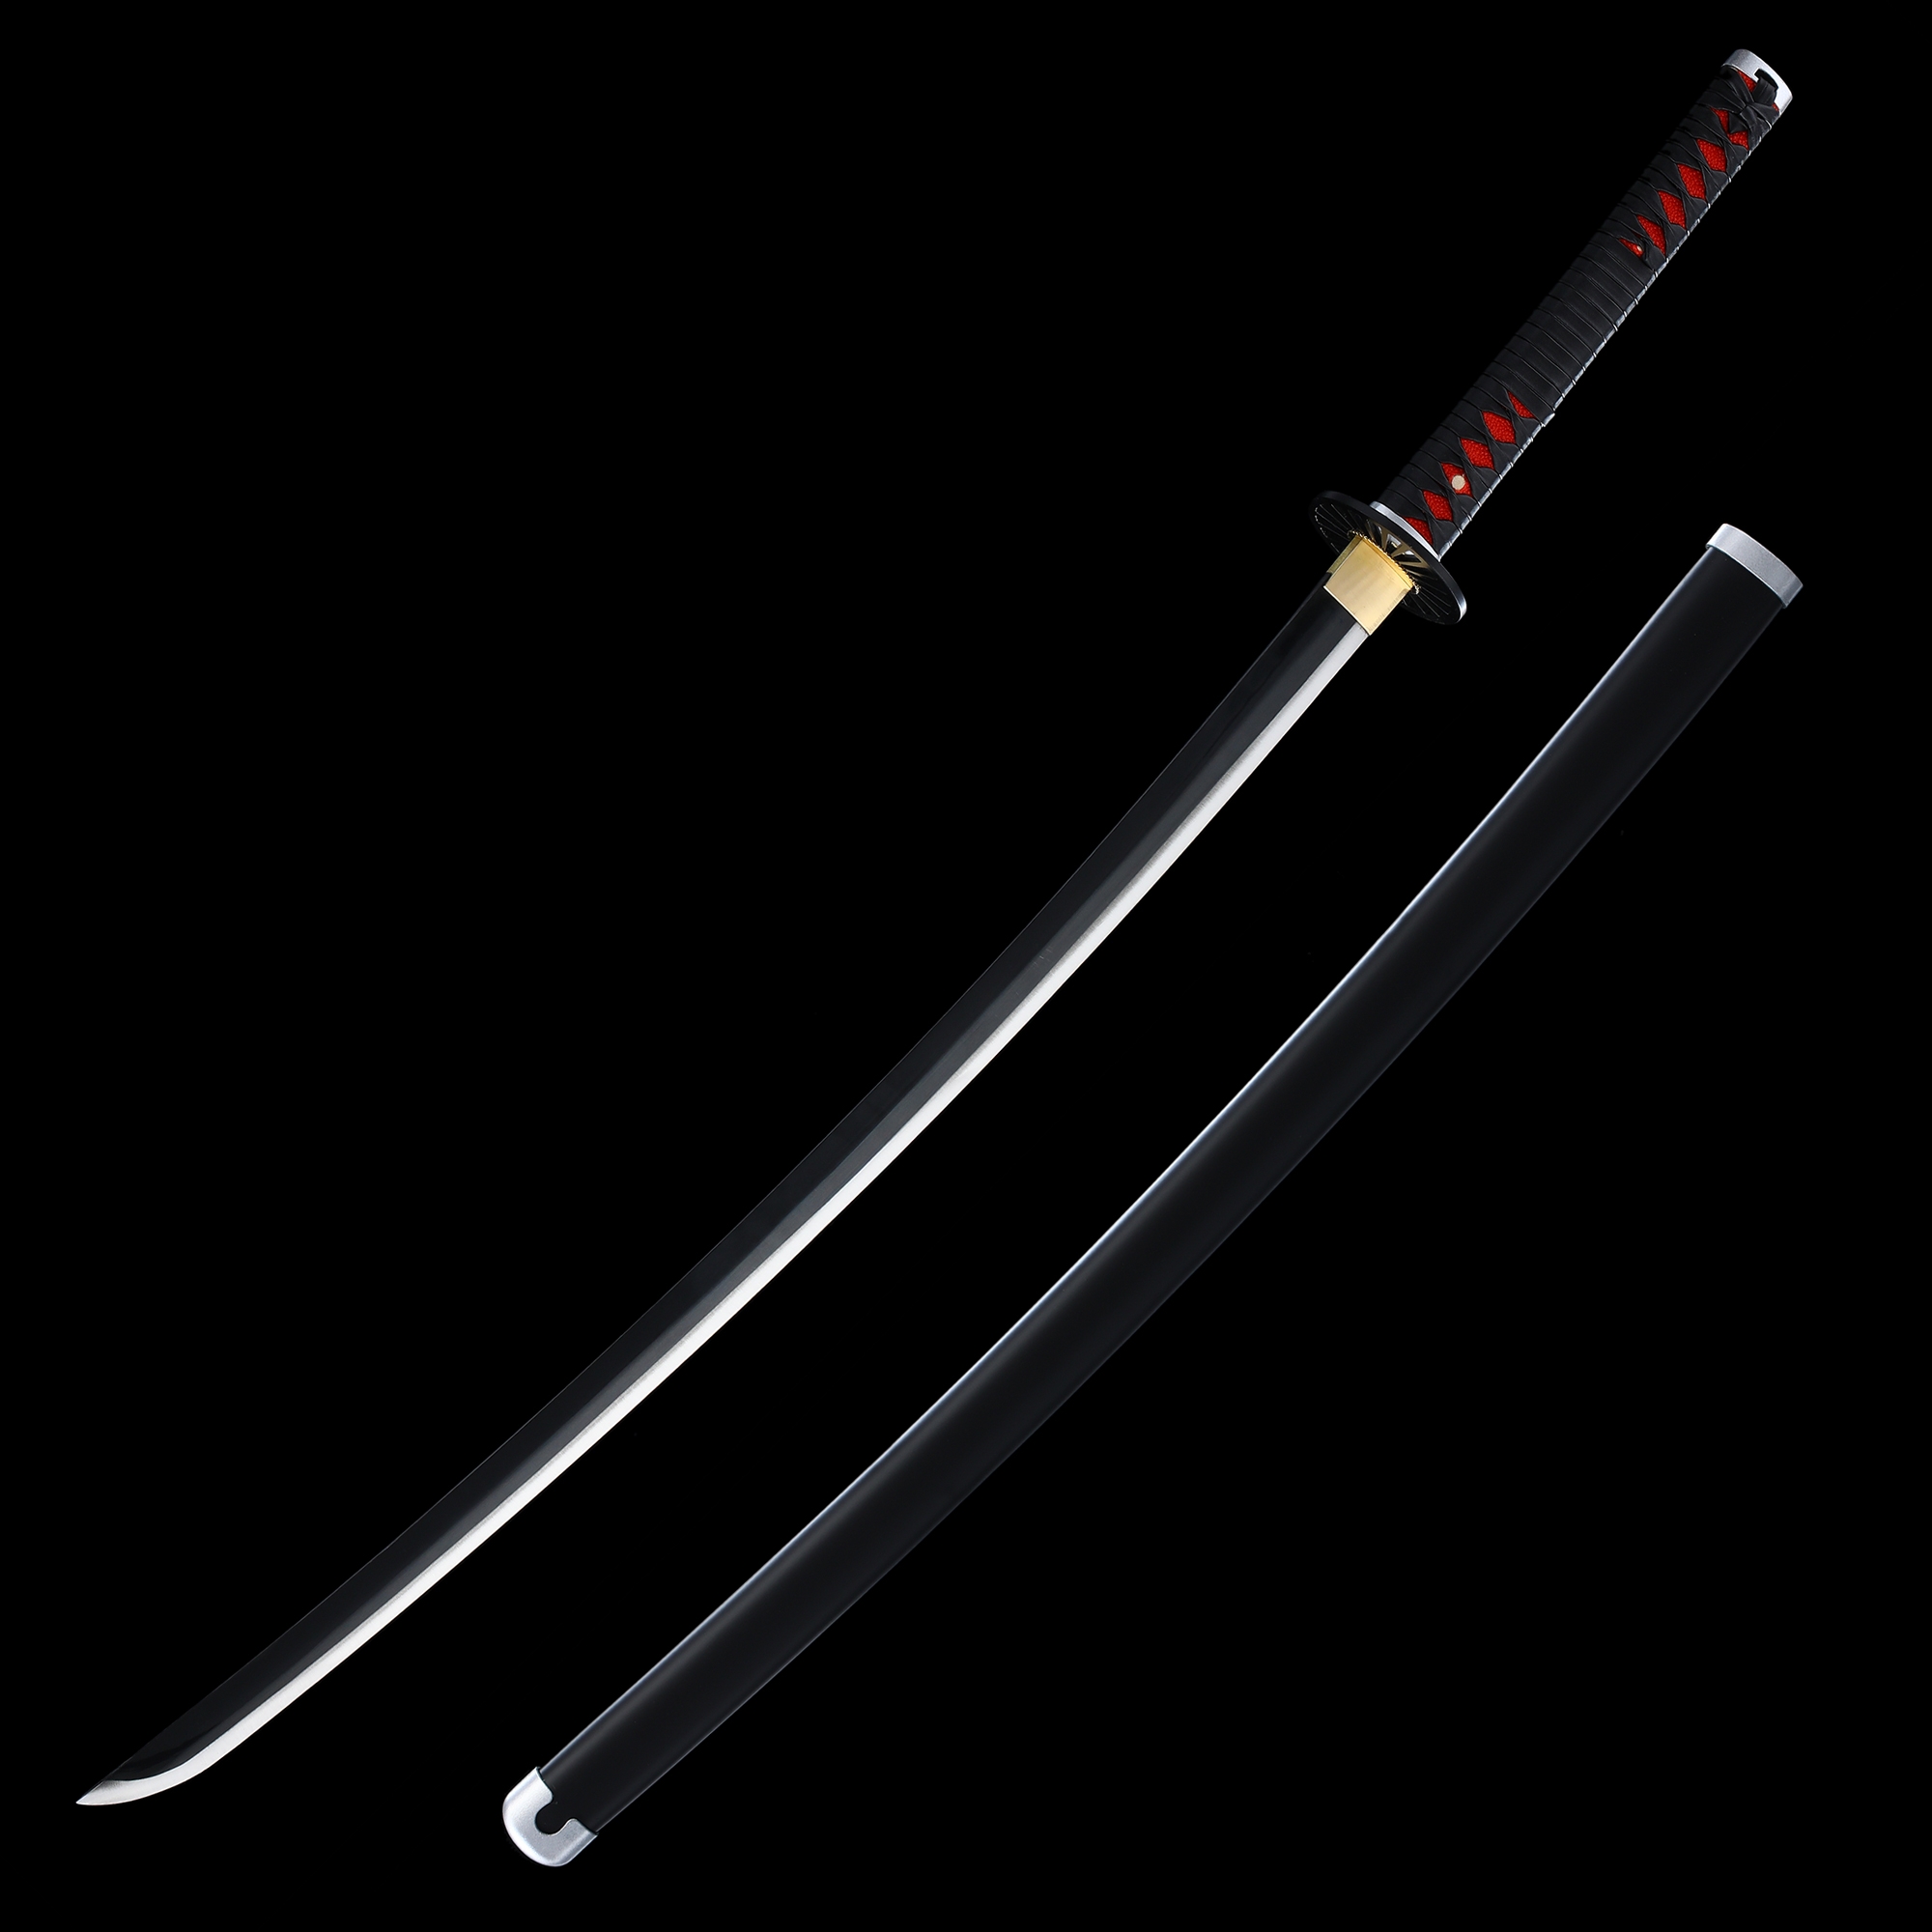 Tanjiro Sword Miniature - Tanjiro Kamado's Black Nichirin Katana